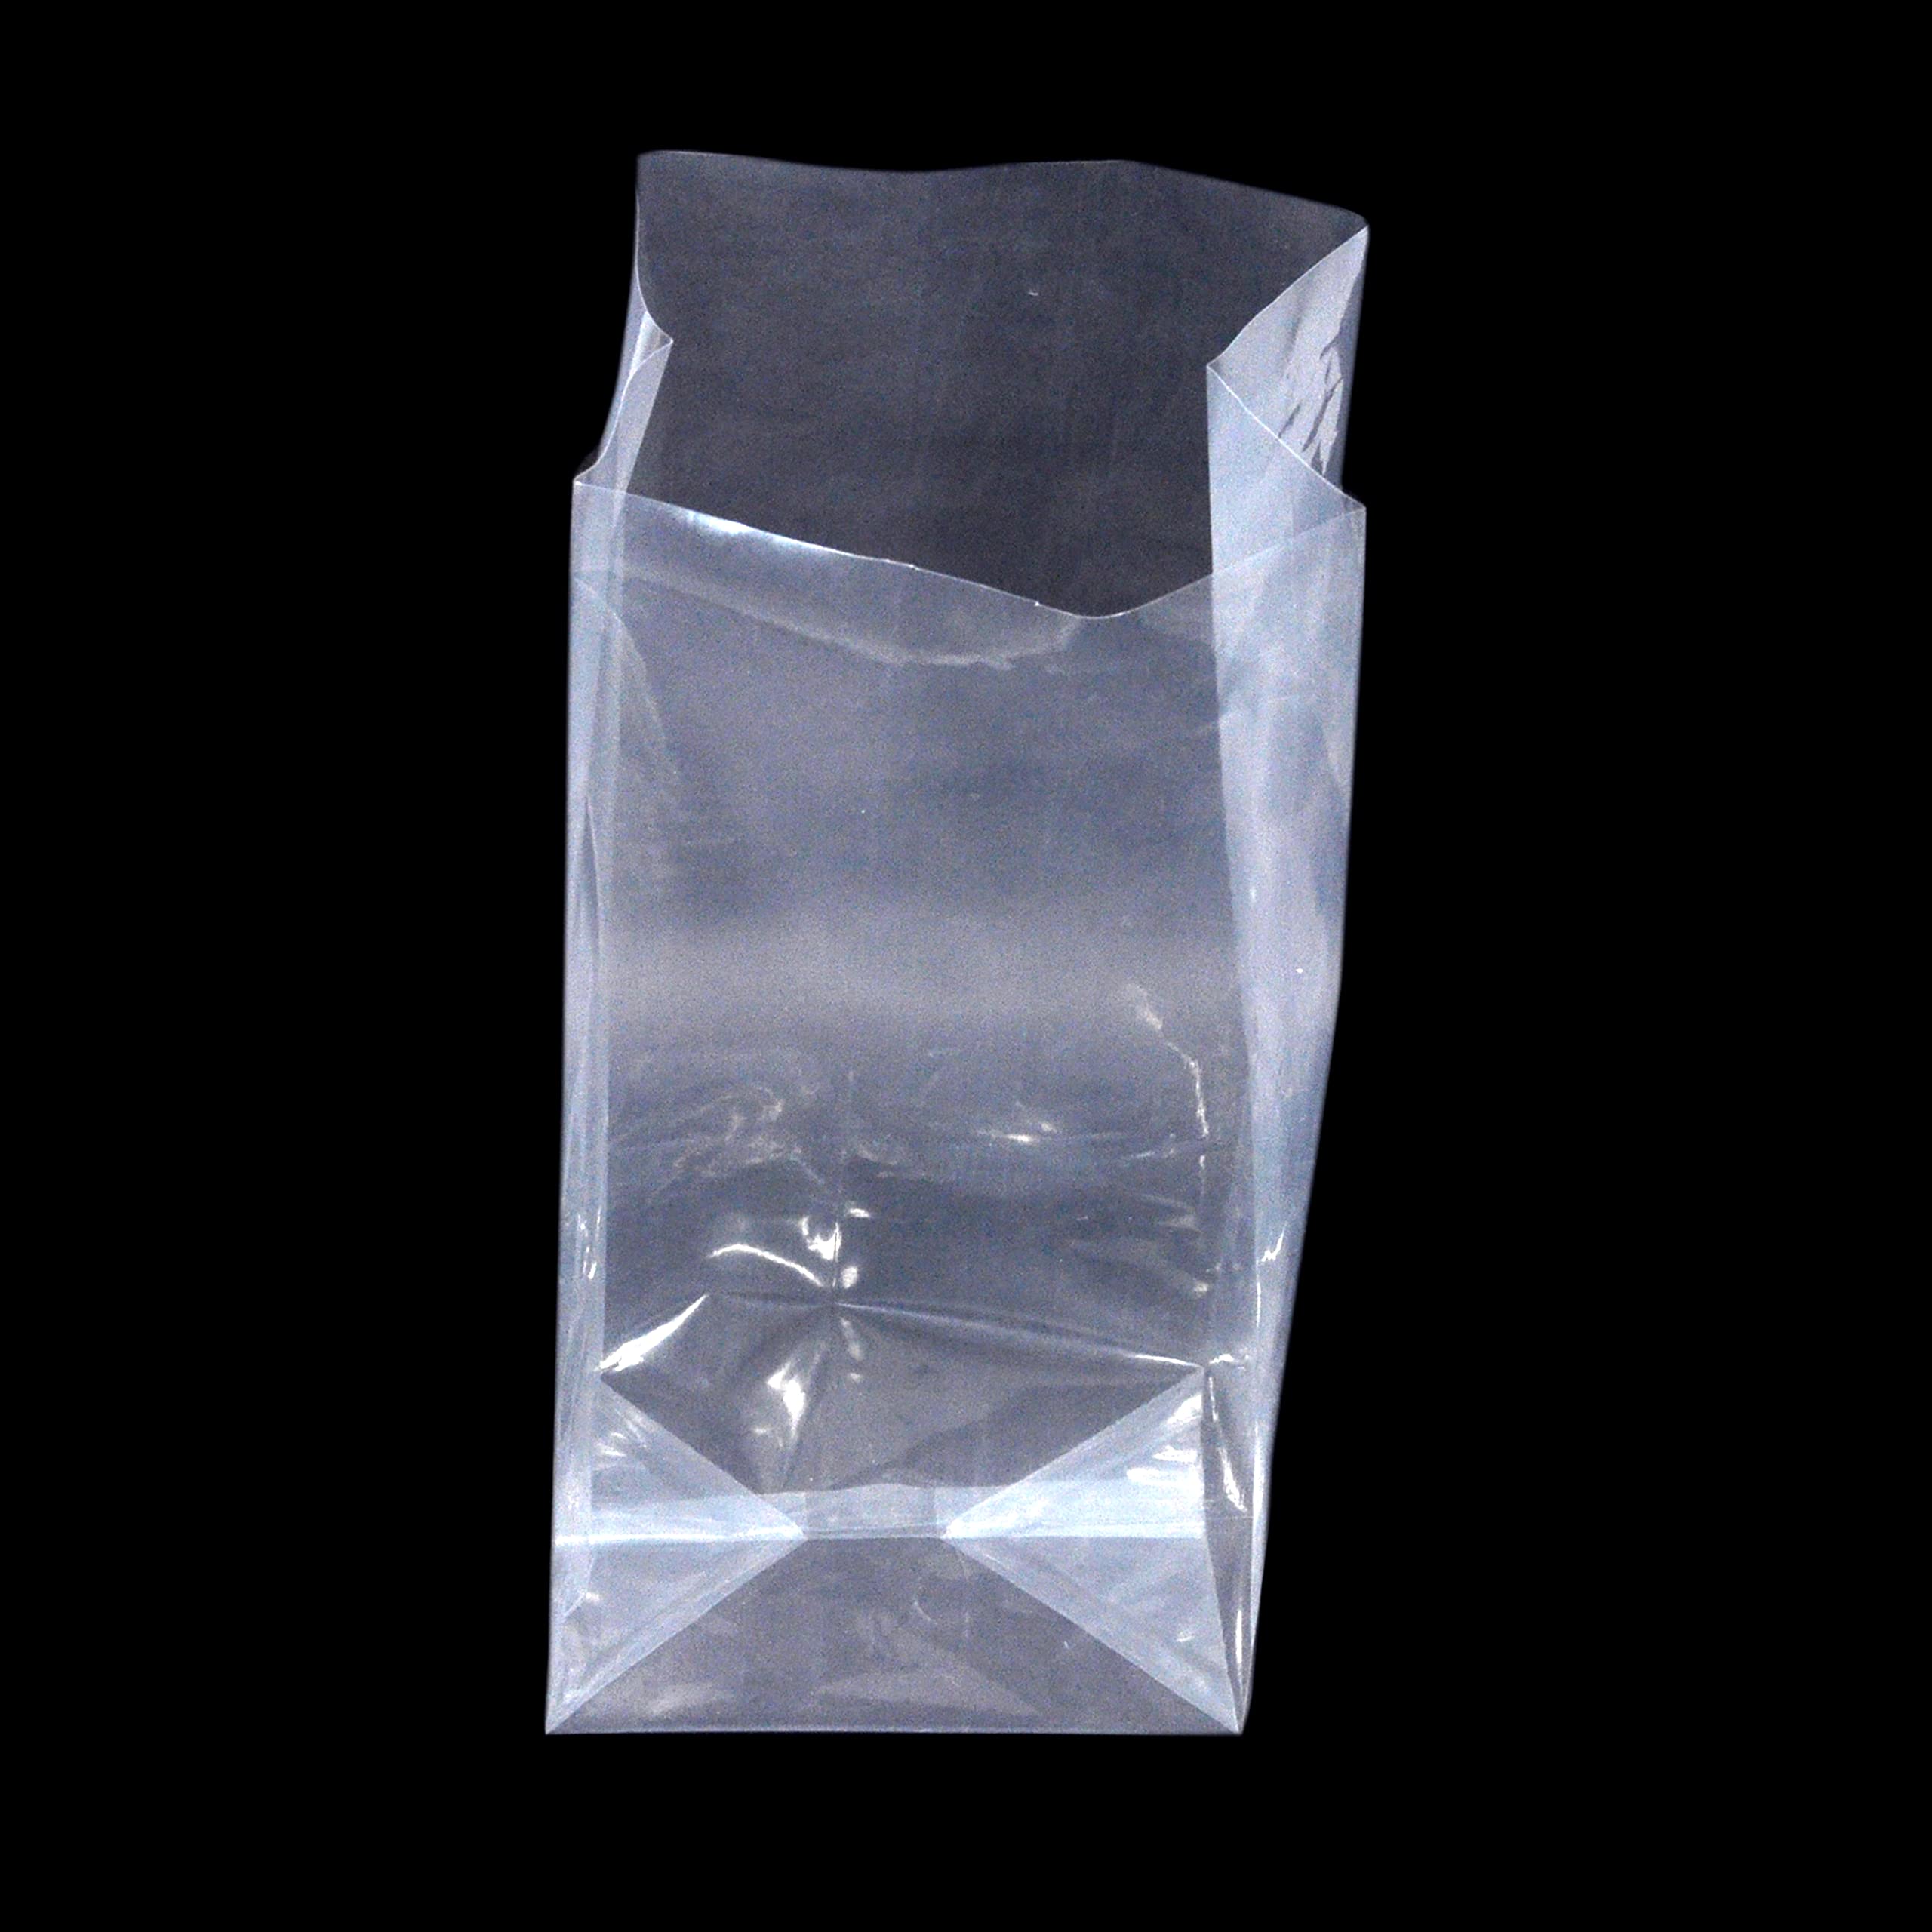 5”L x 4”B x 16”H ALFA Fishery Bags Flat bottom Leak Proof Clear Plastic Fish Bags for Tropical & Marine Fish Transport 225 Gauge (10)